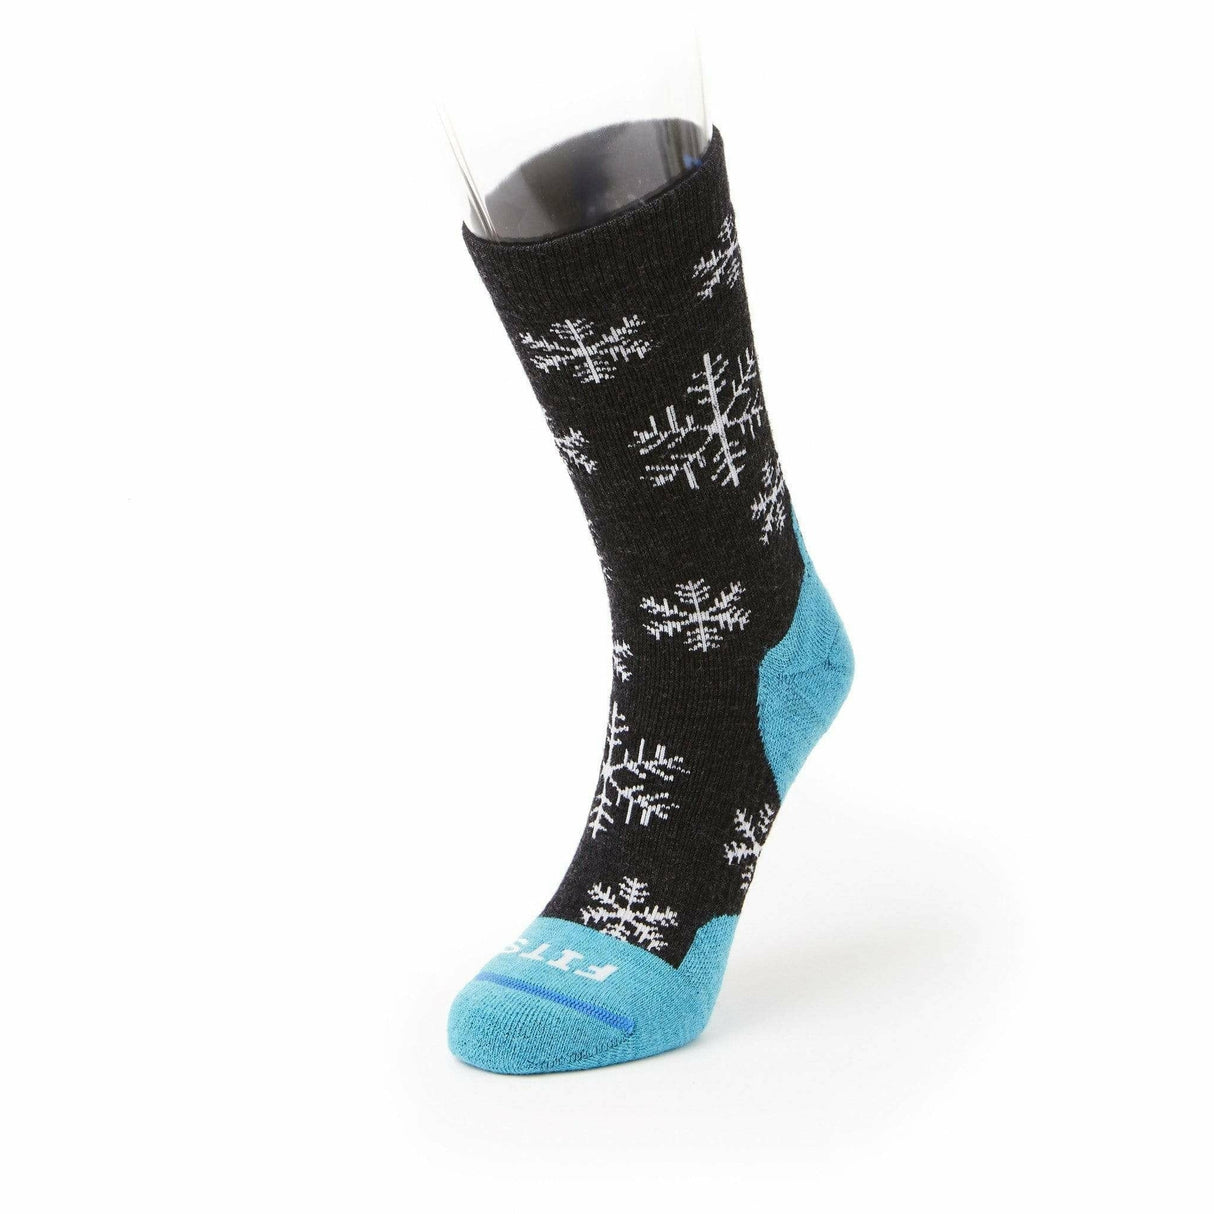 FITS Medium Hiker Crew Socks  -  Small / Charcoal/Scuba